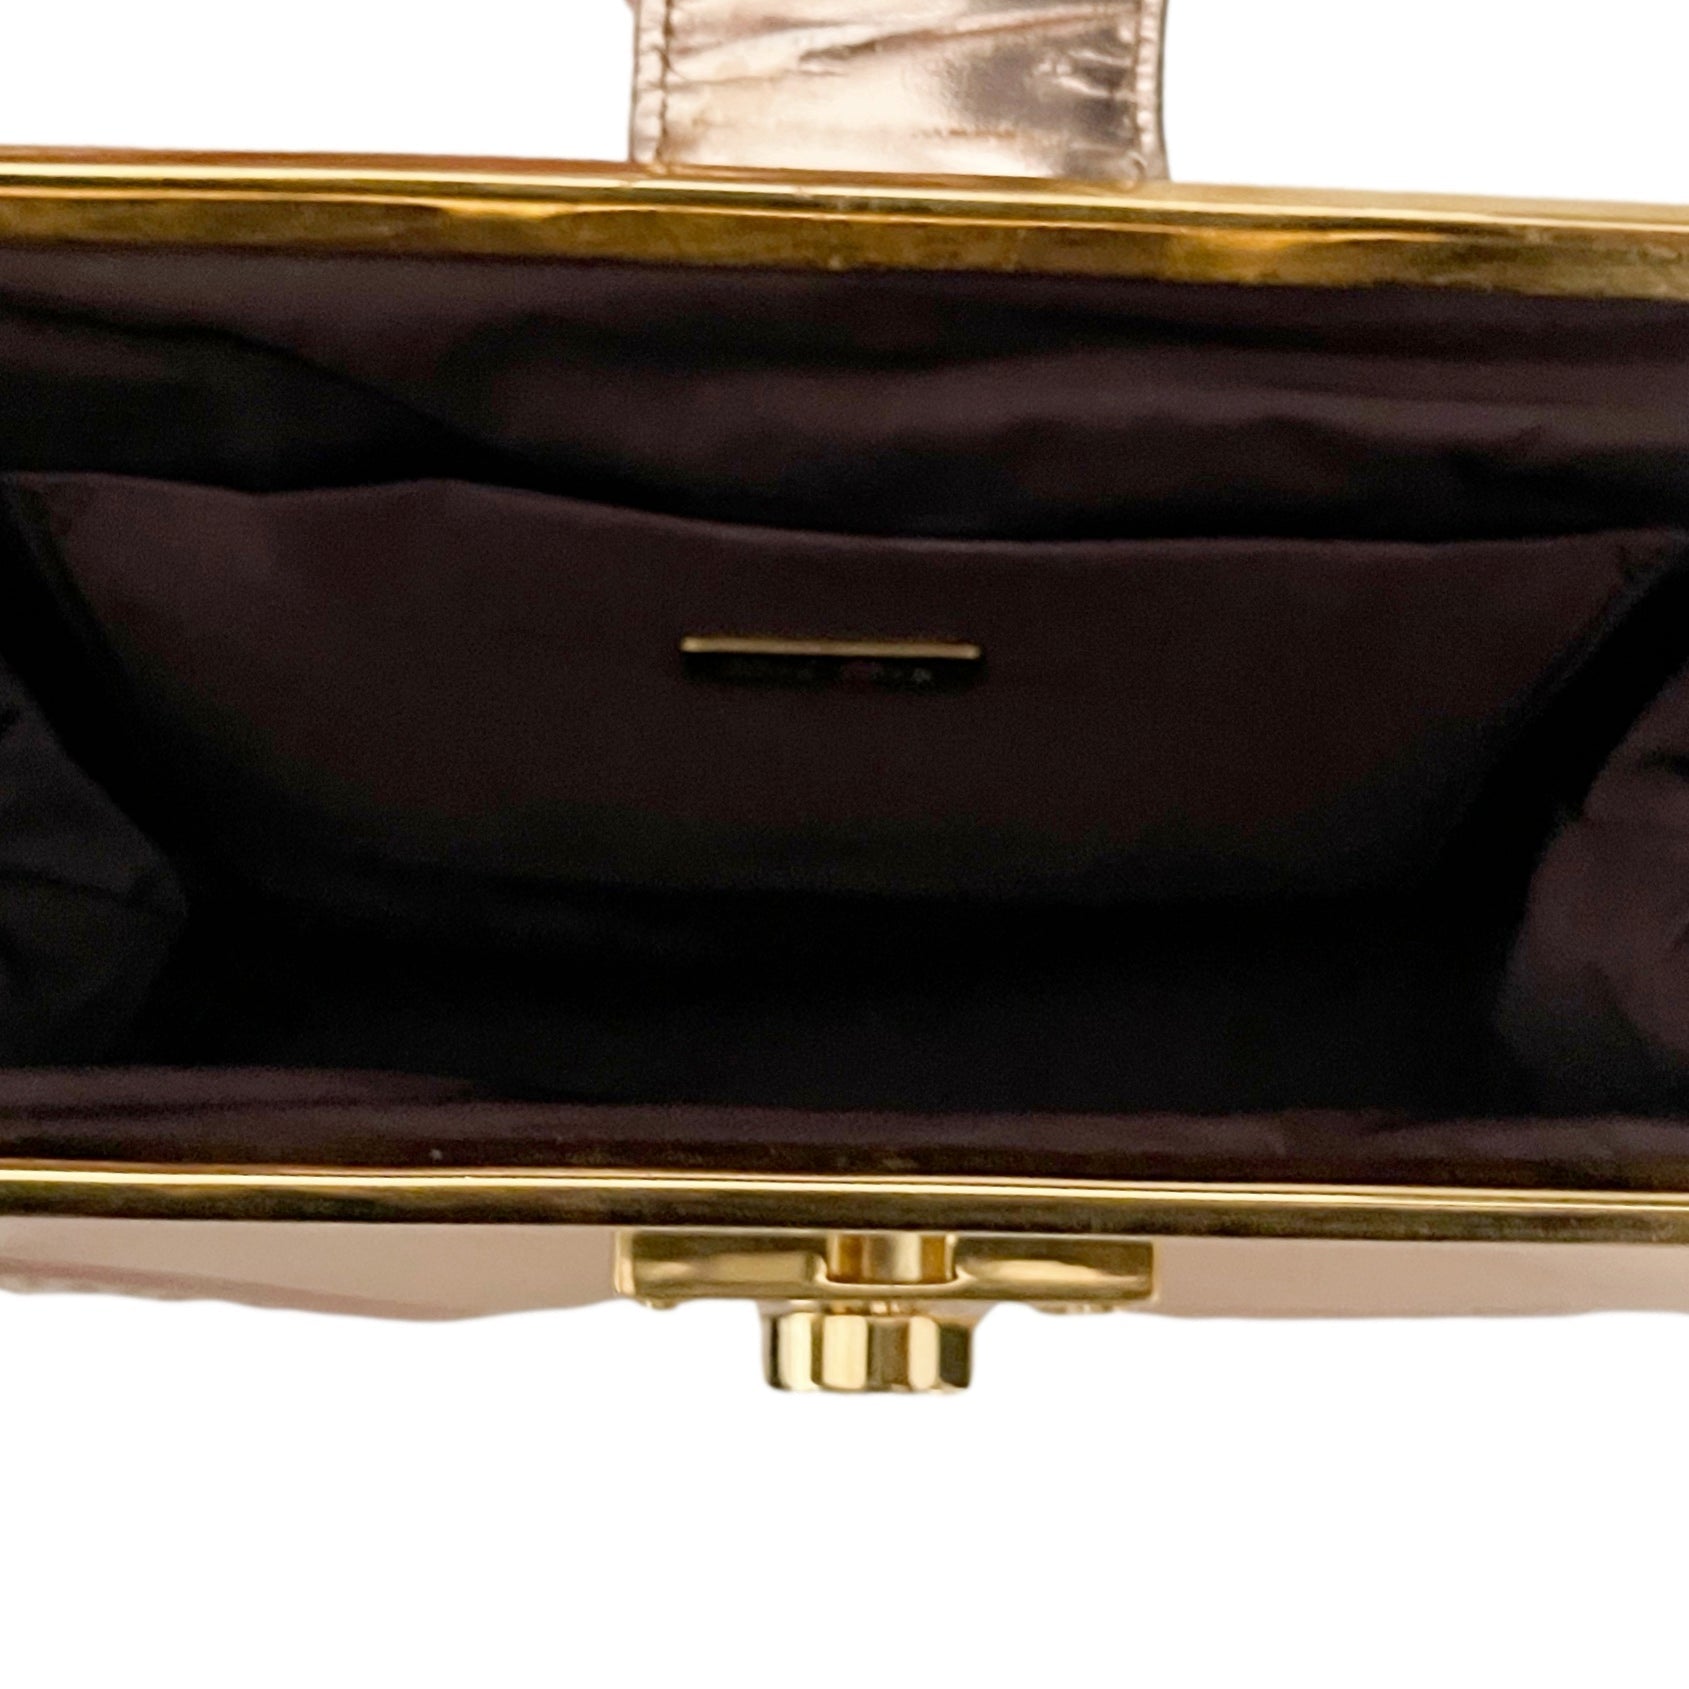 Miu Miu Rose Gold Mini Bag - Handbags